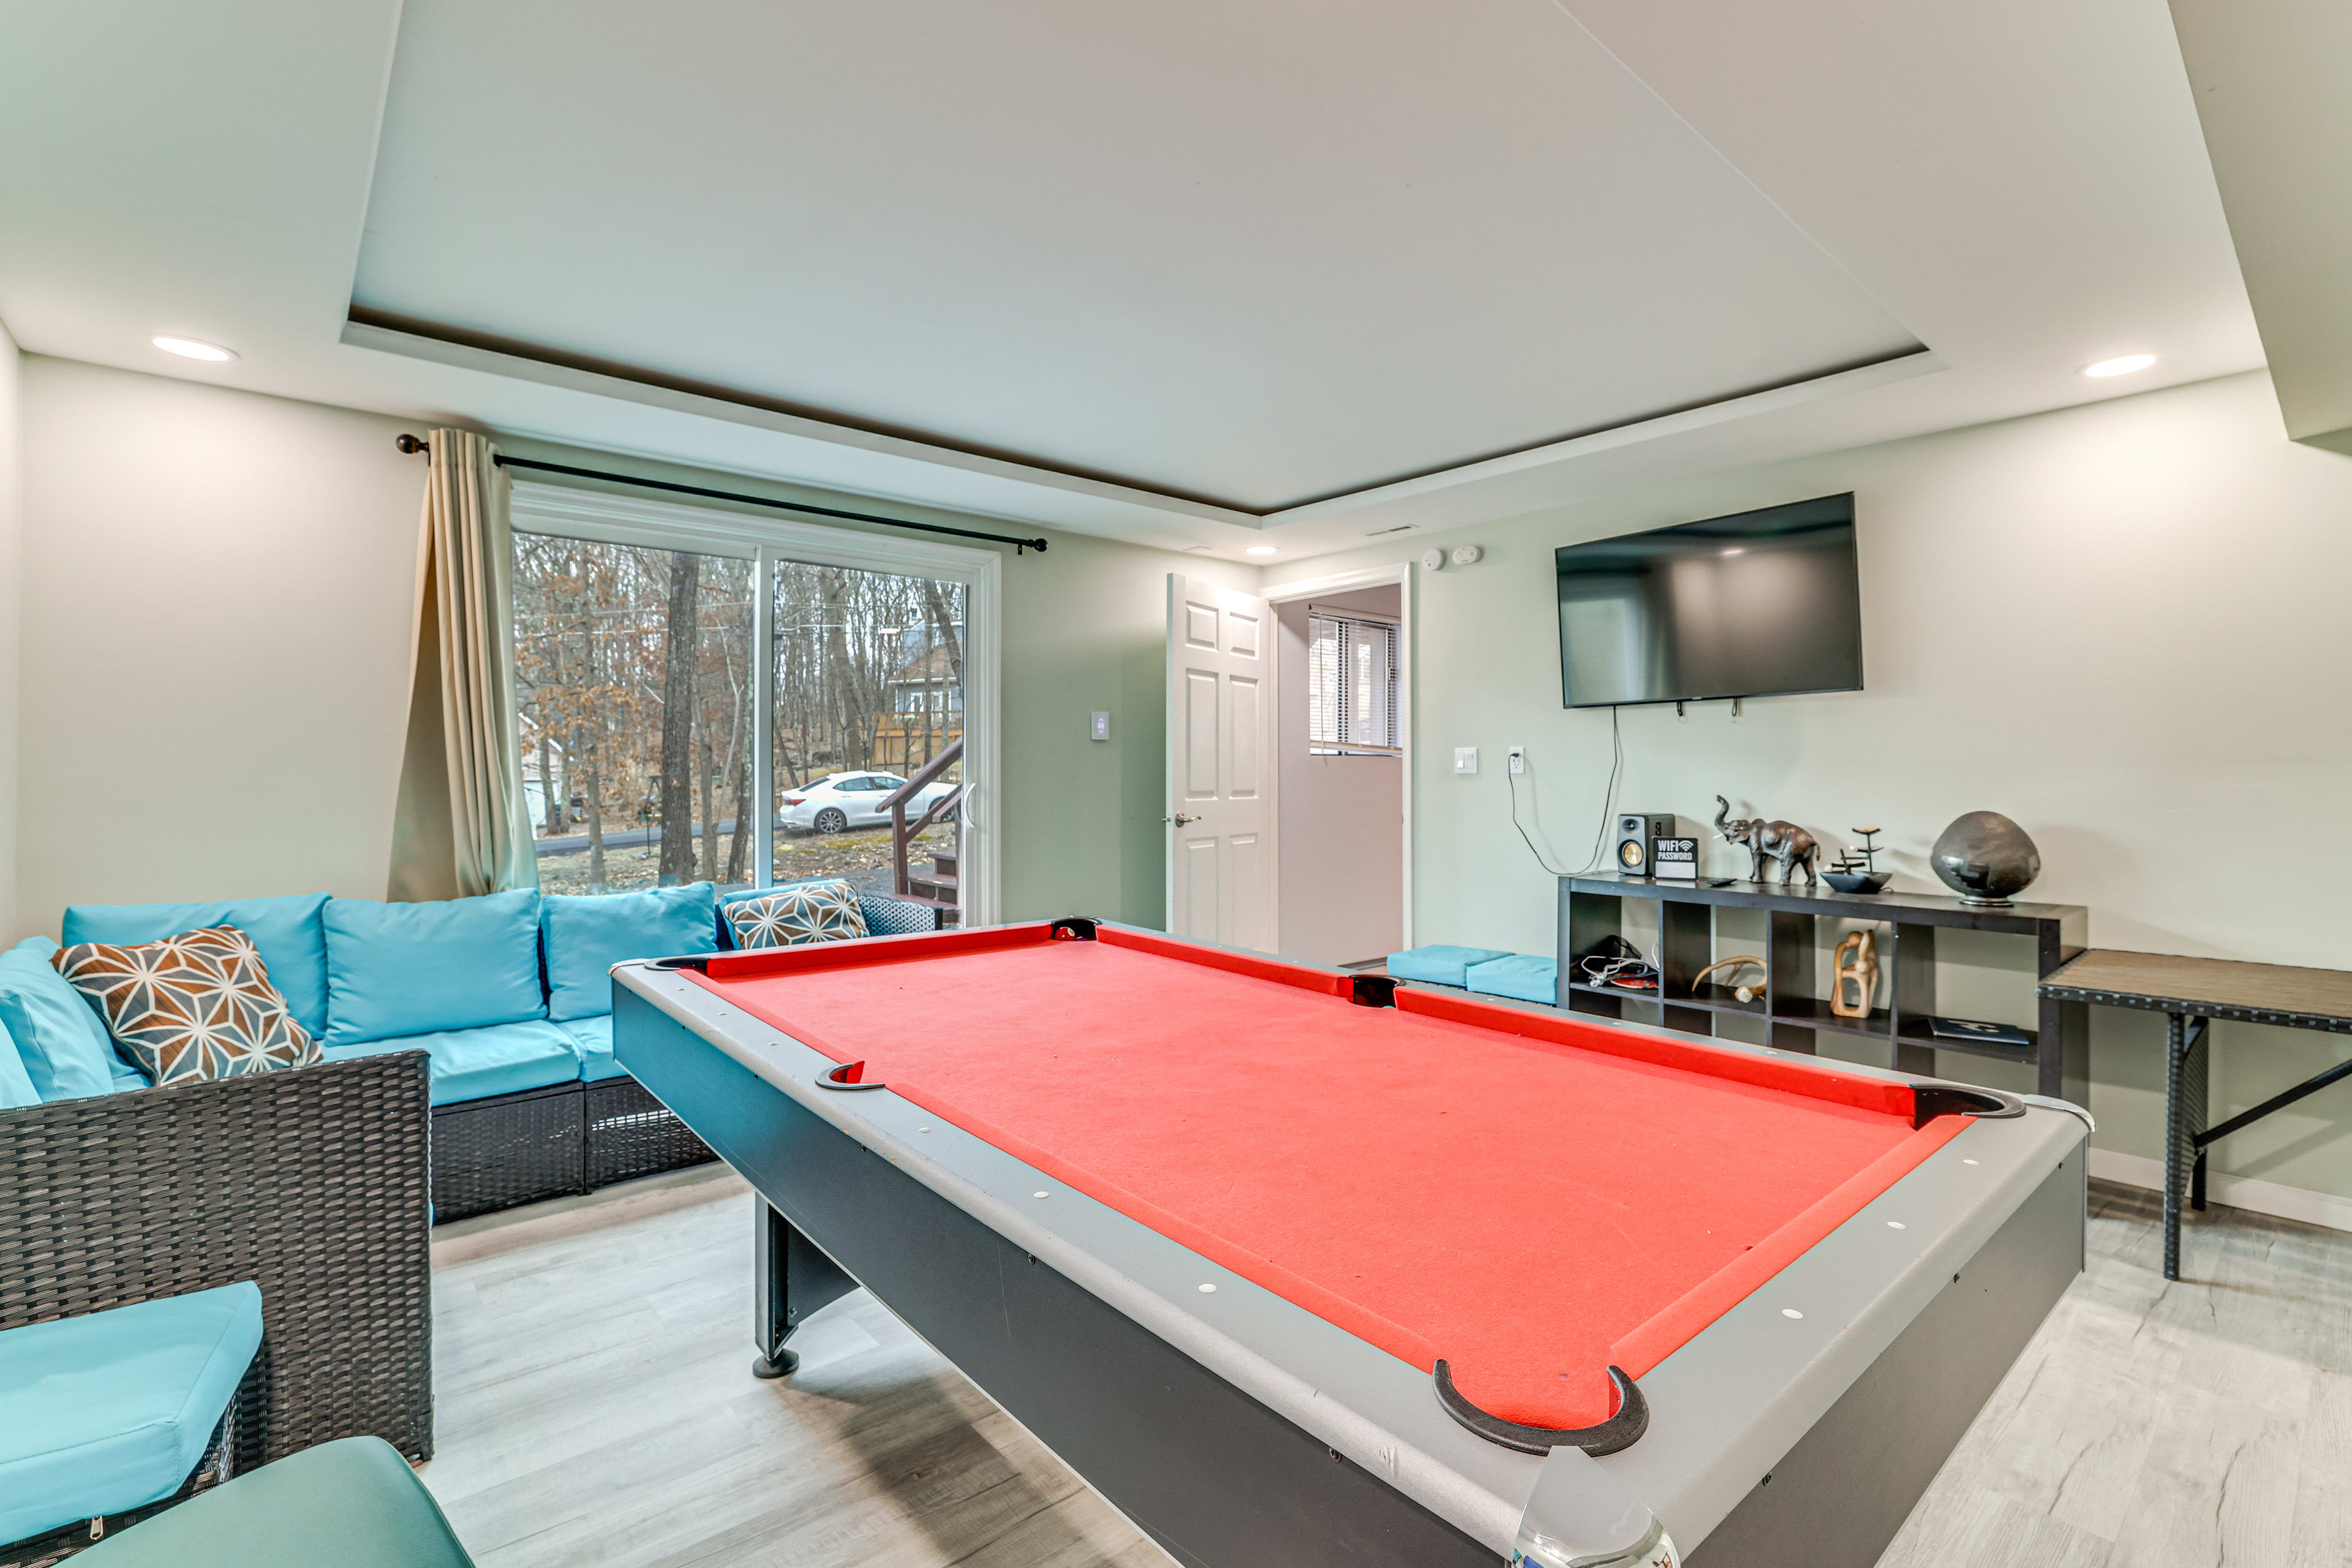 Game Room | Pool Table | Smart TV